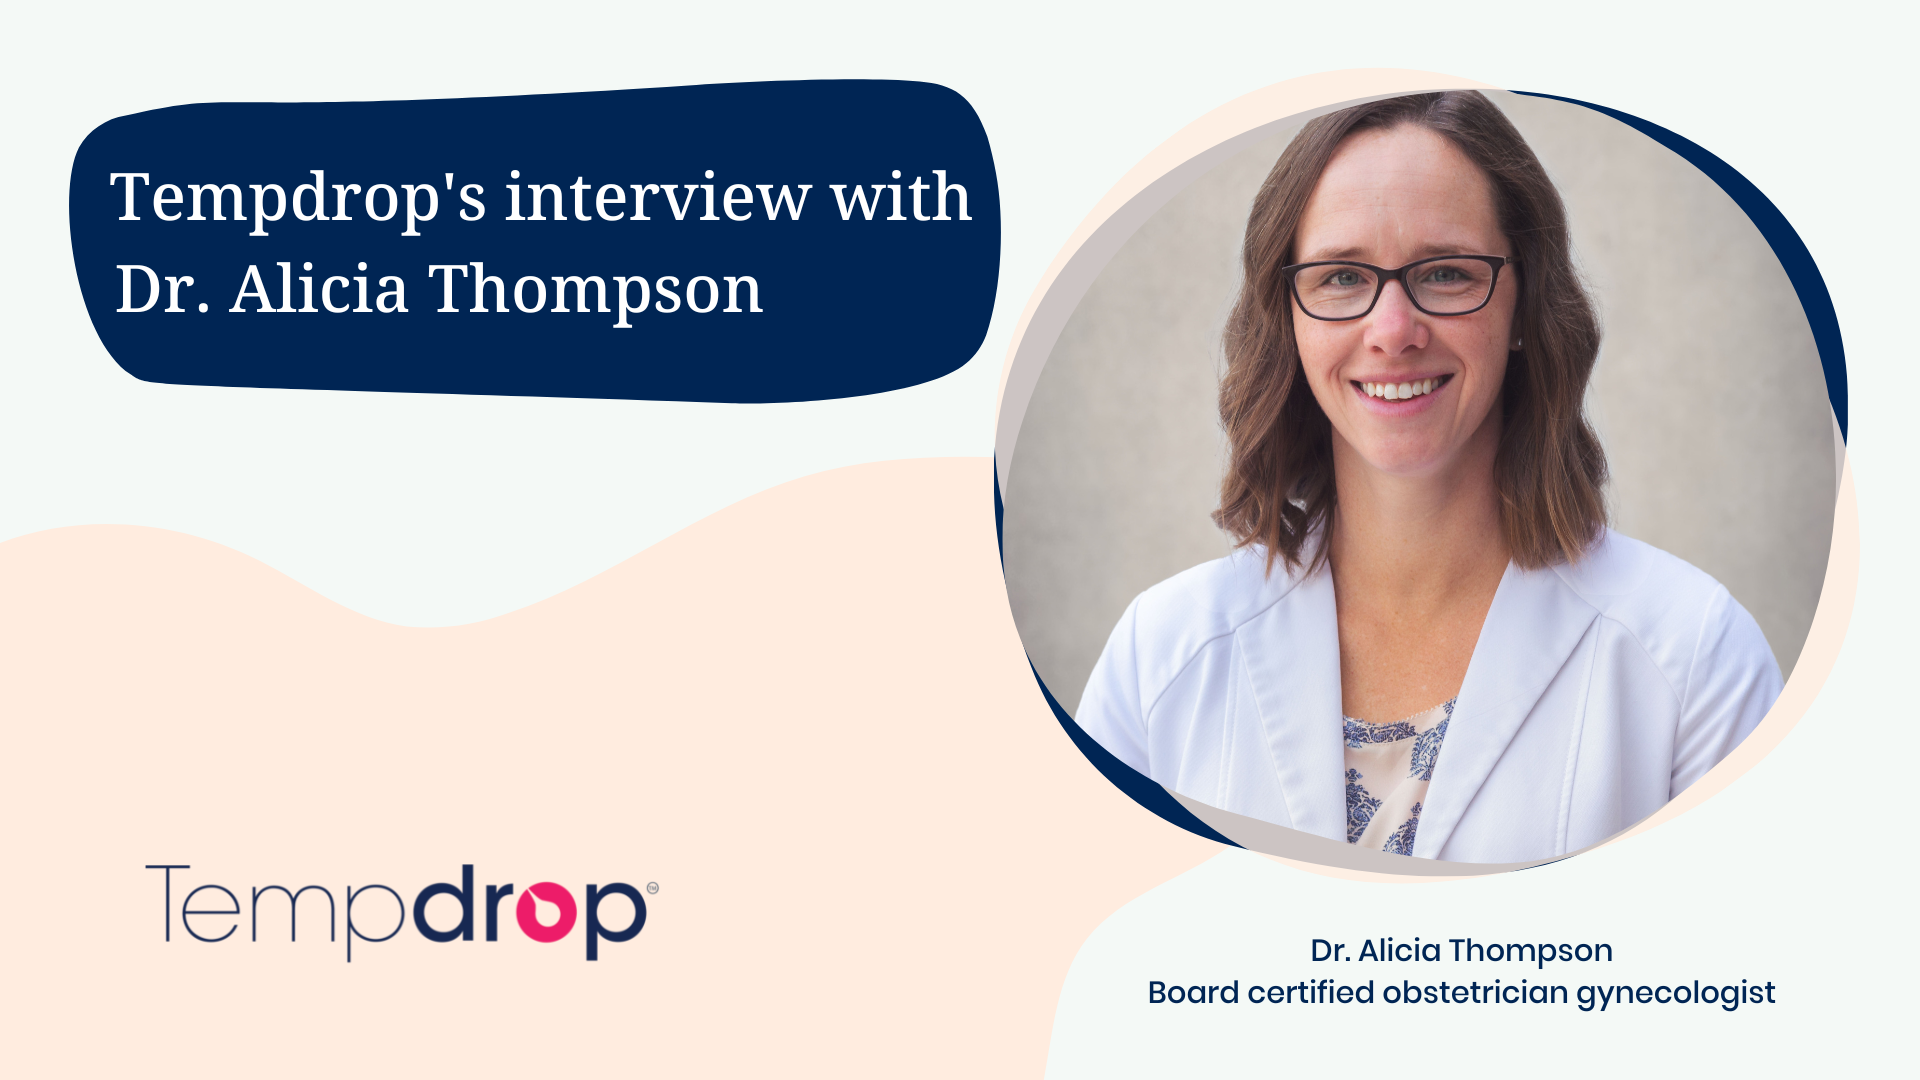 Dr.Alicia Thompson's interview